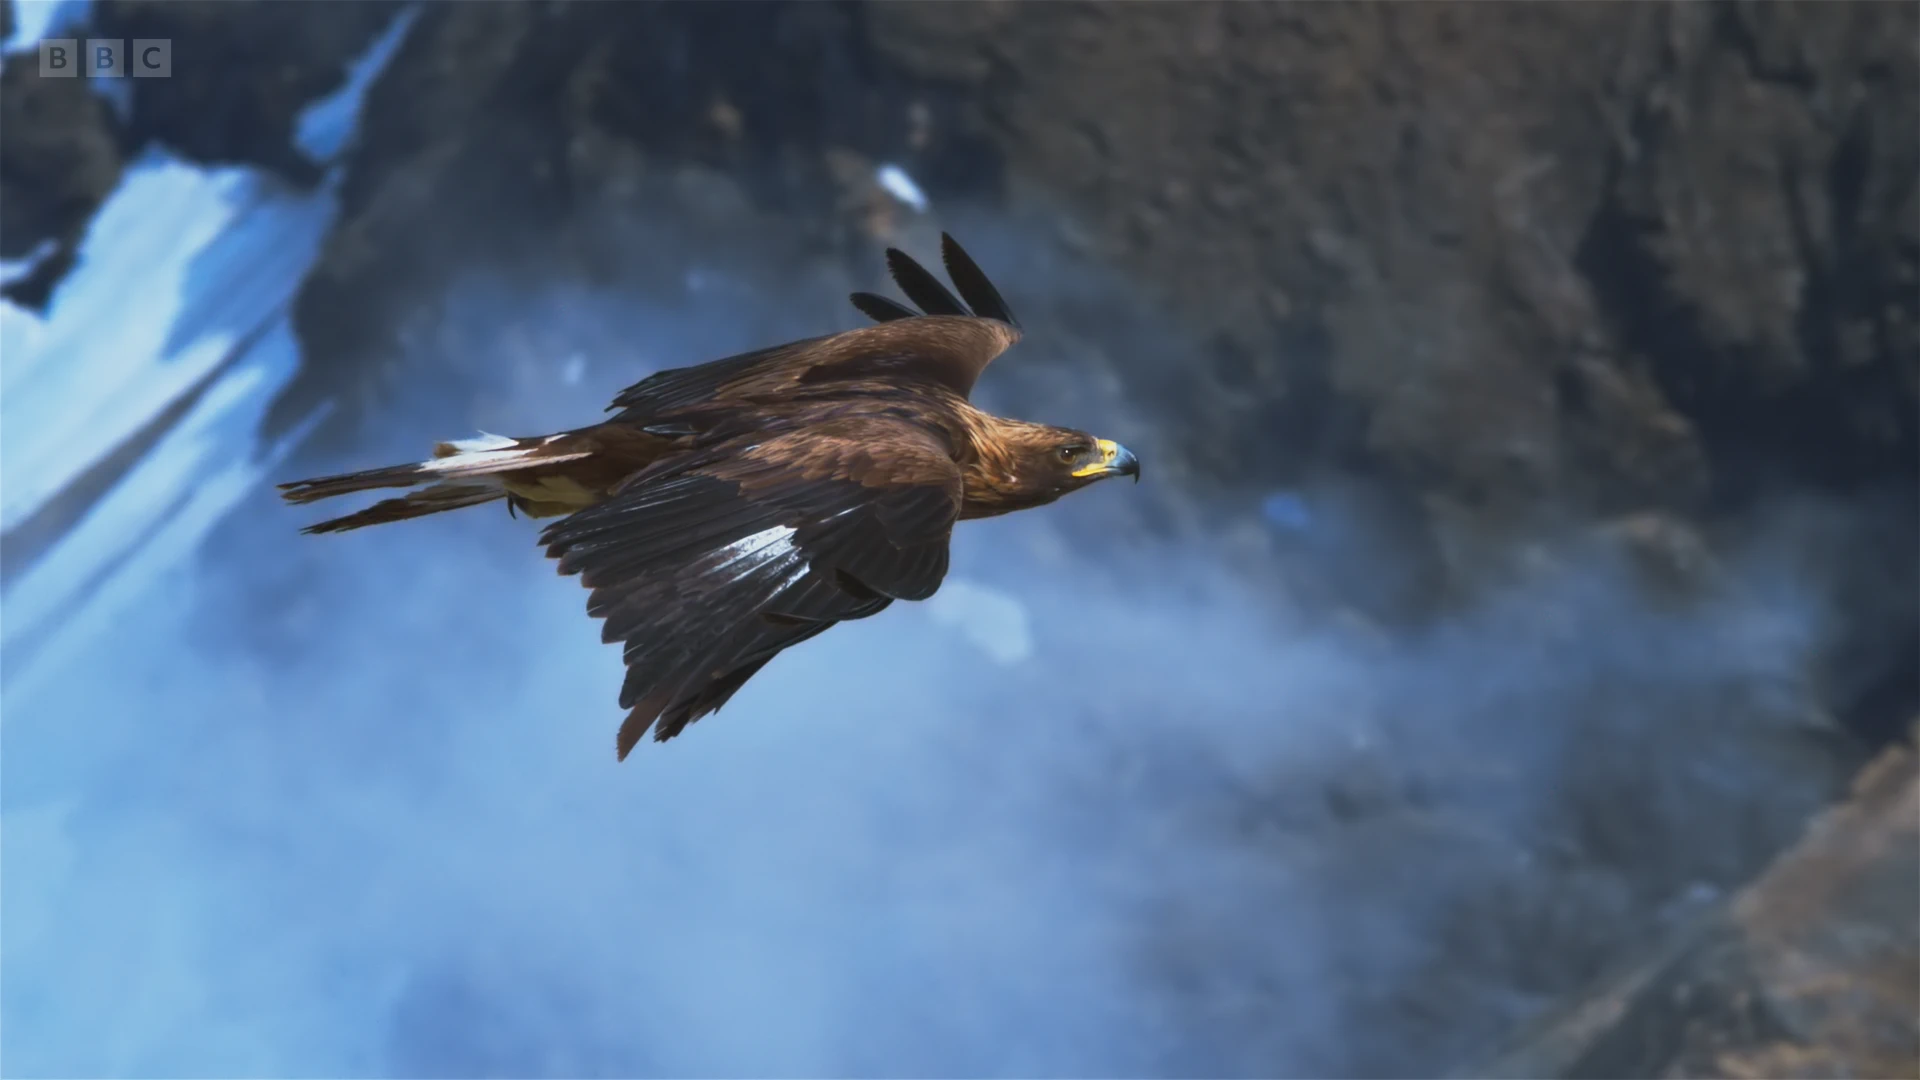 European golden eagle (Aquila chrysaetos chrysaetos) as shown in Frozen Planet II - Frozen Peaks